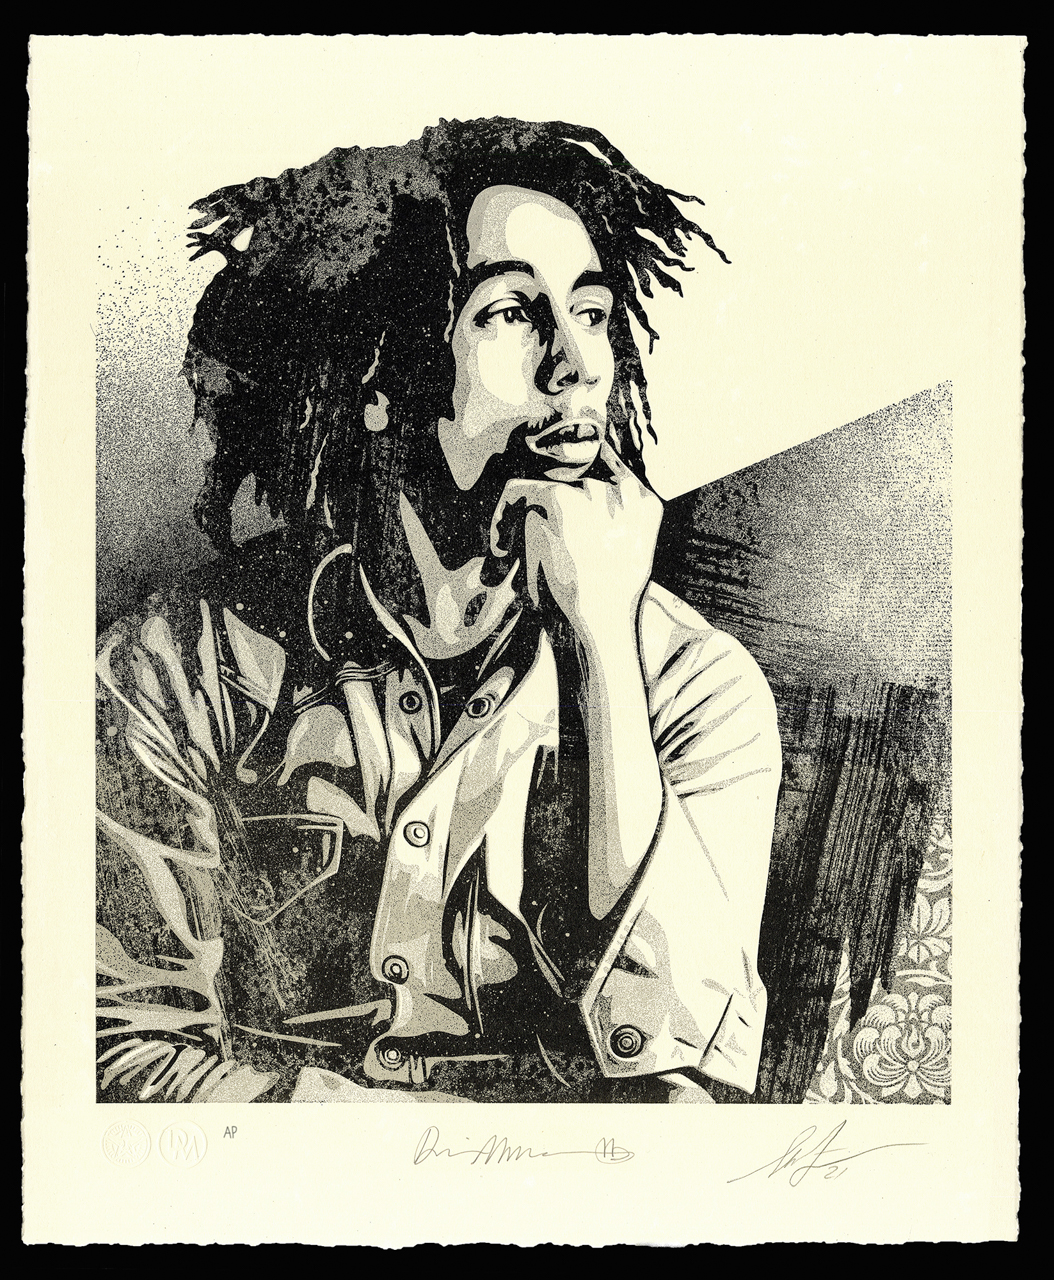 Bob Marley 40th Letterpress - "Soul Rebel" - 16 x 19.5 inches